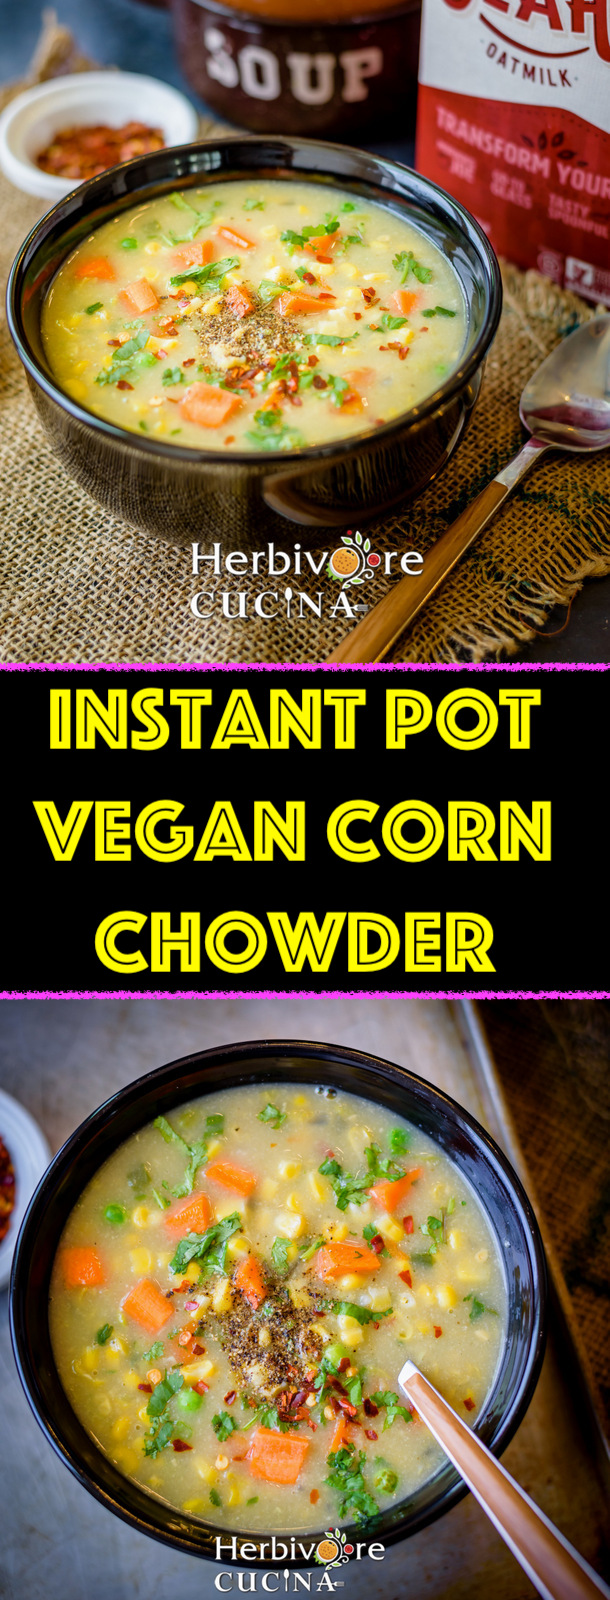 Instant Pot Vegan Corn Chowder